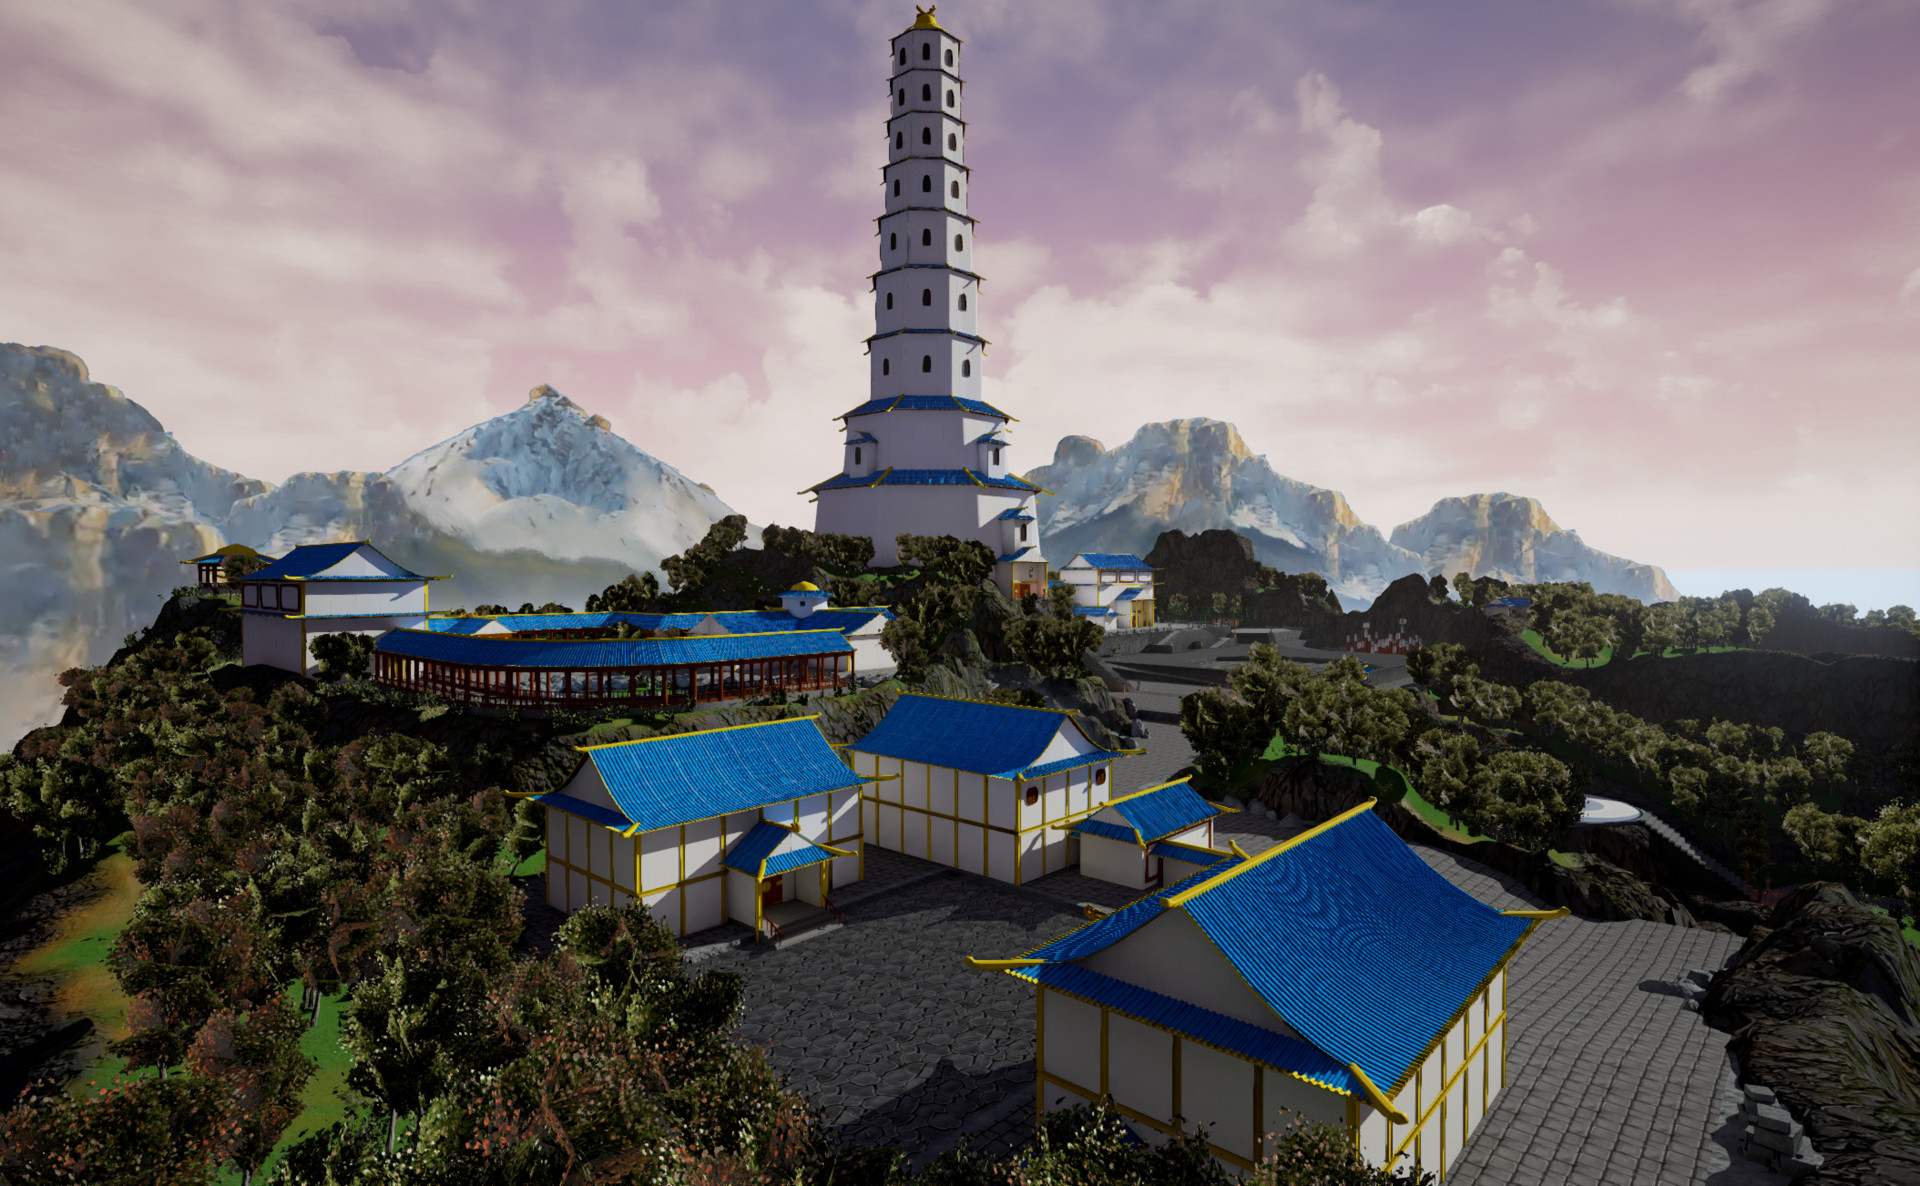 minecraft air temple